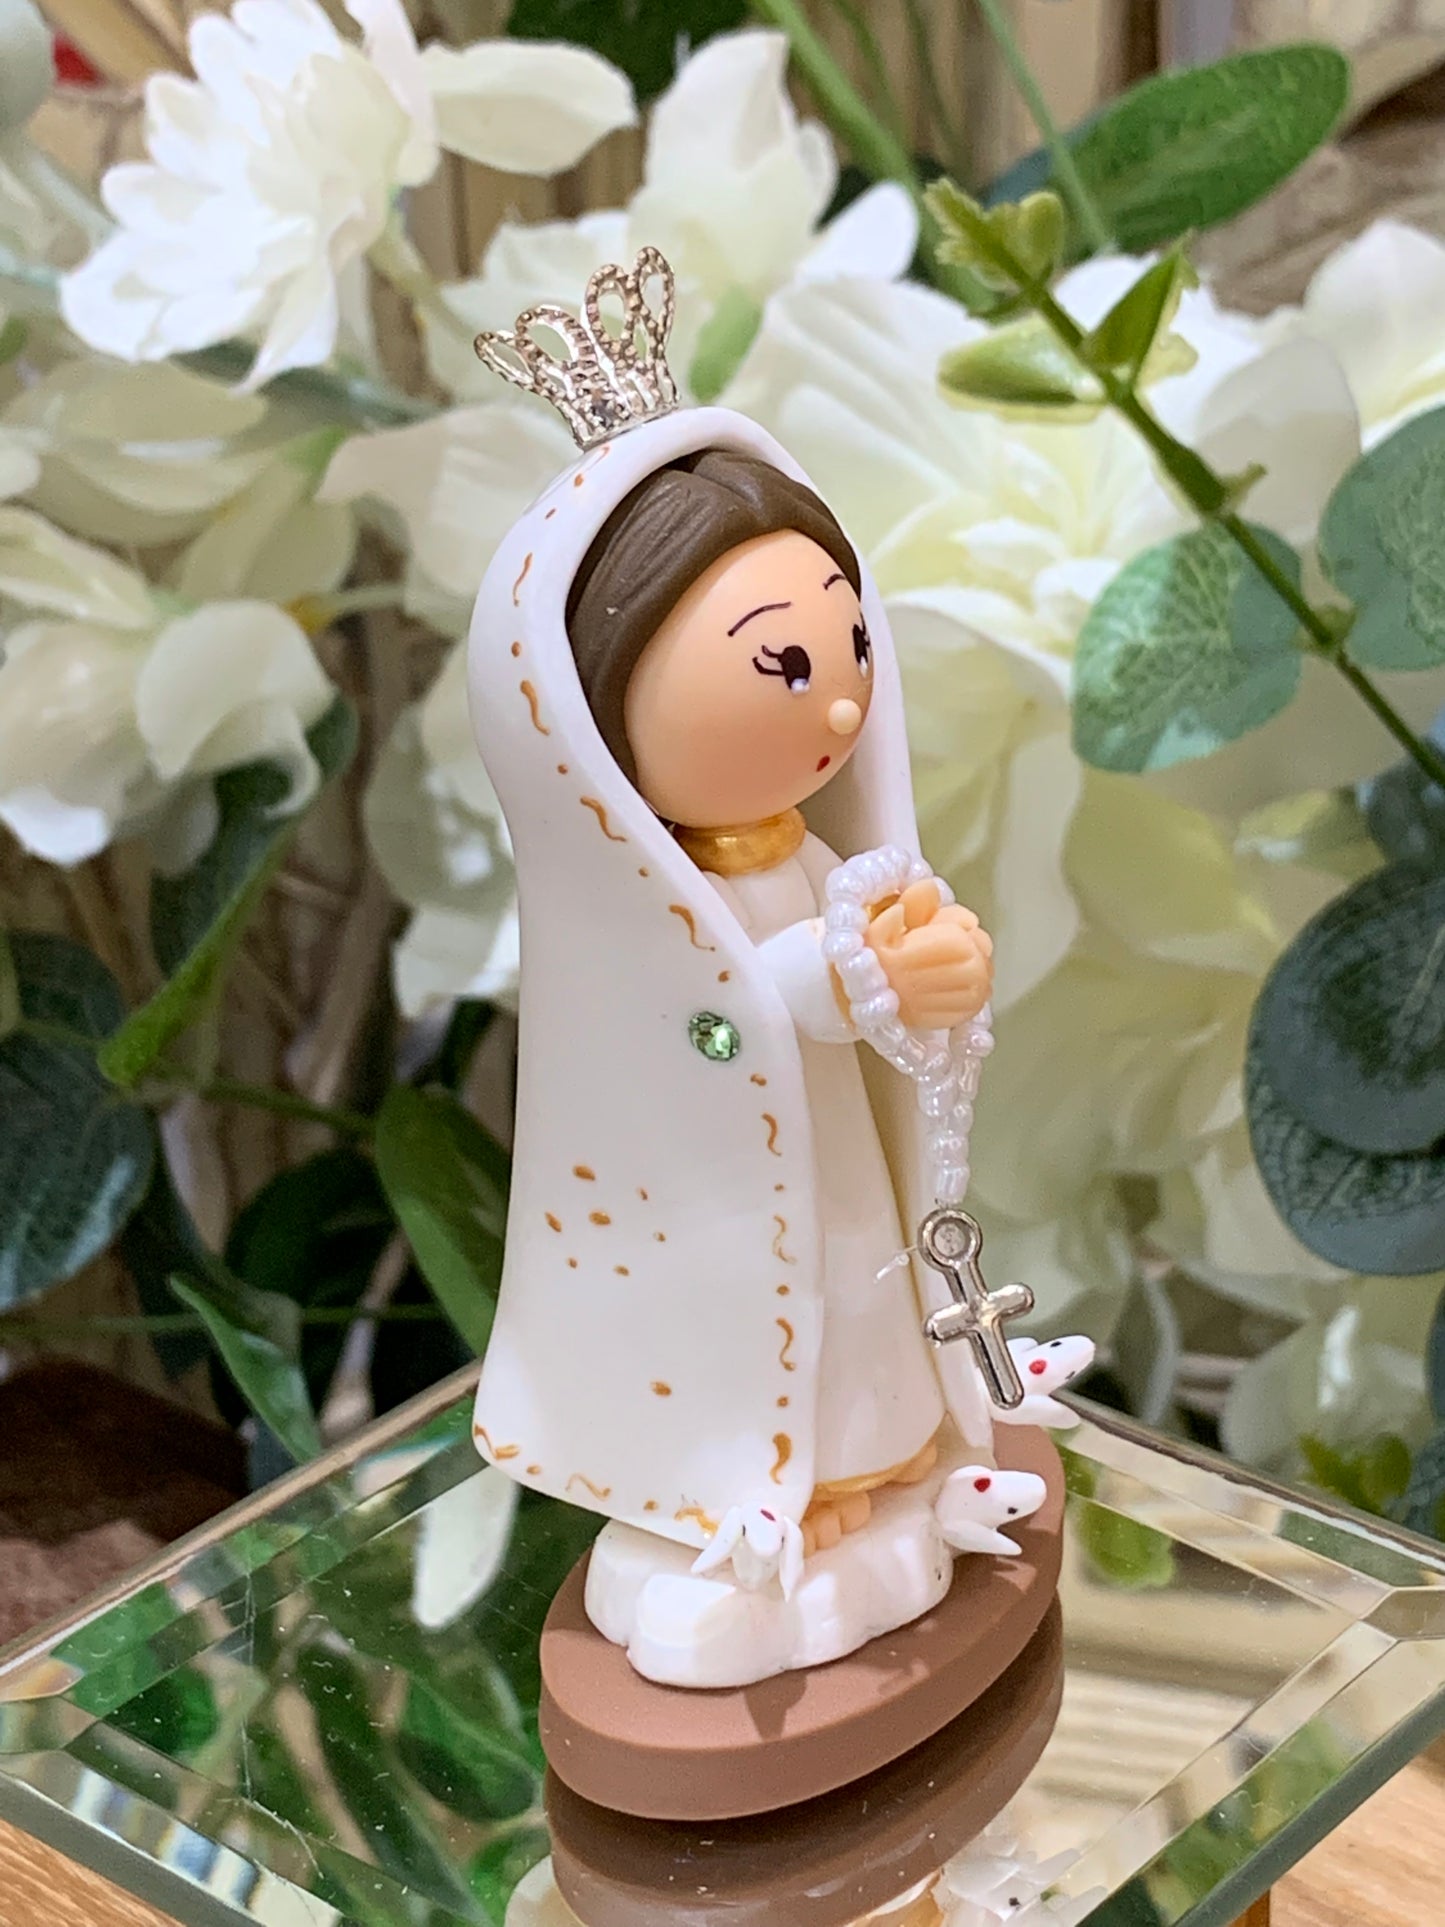 Nossa Senhora de Fátima em Biscuit